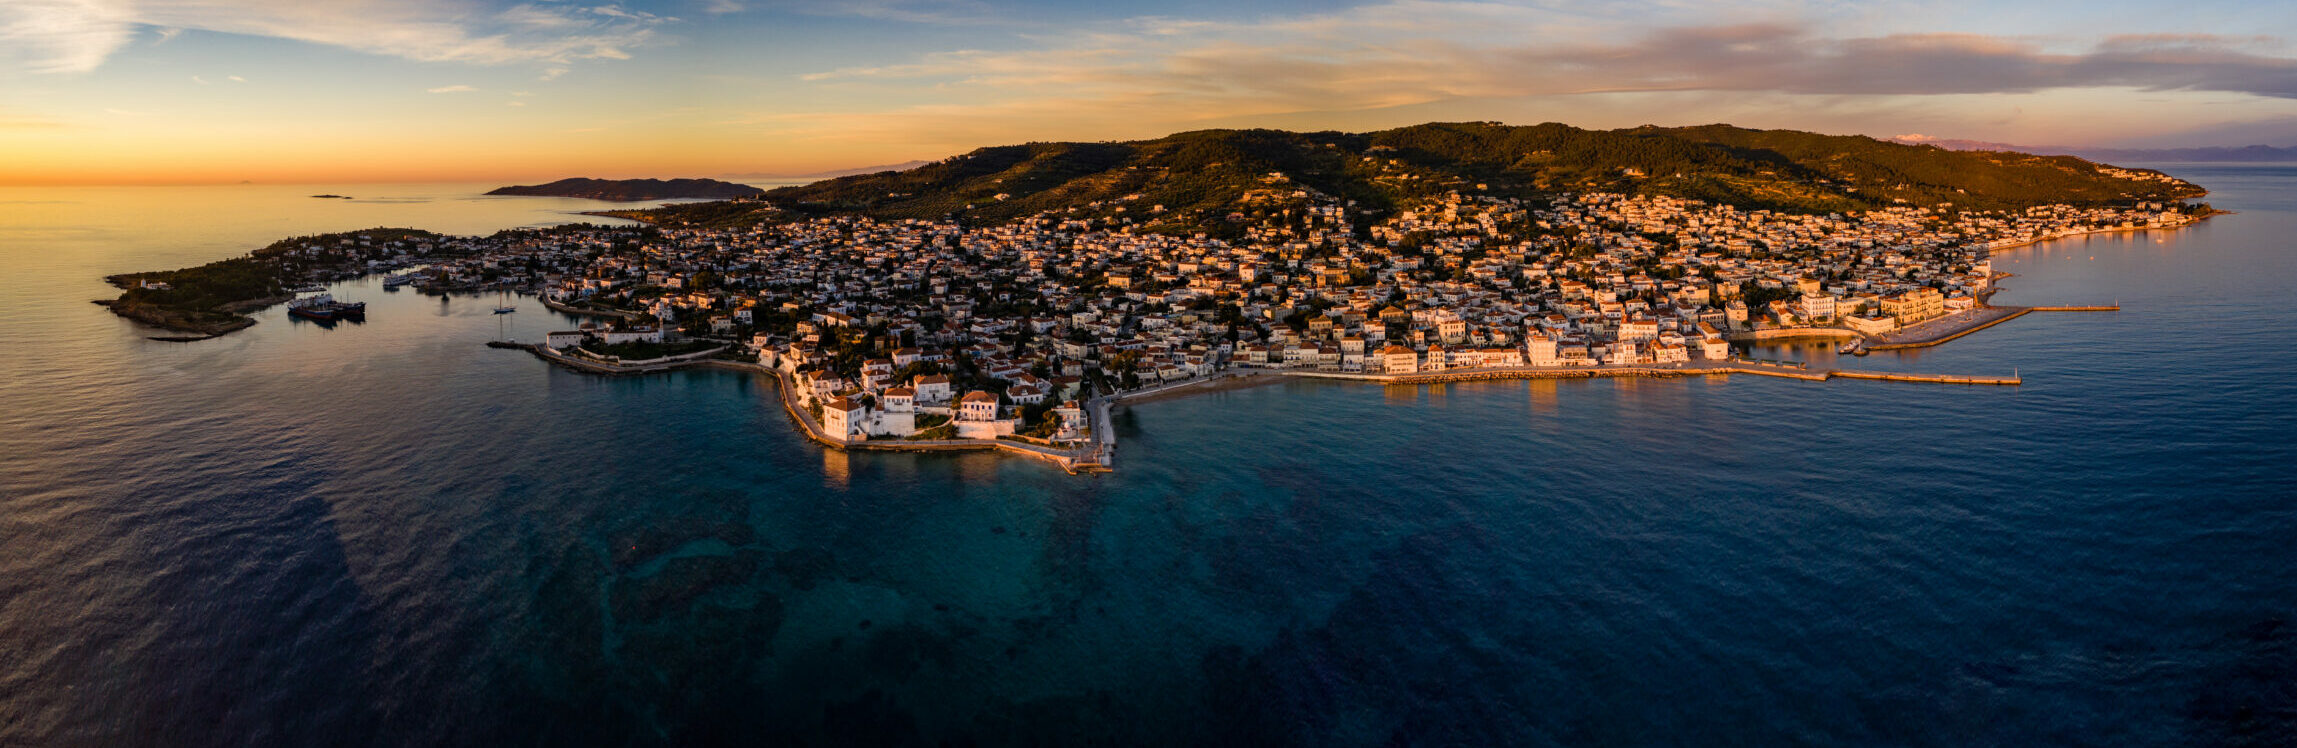 Car-free islands near Athens